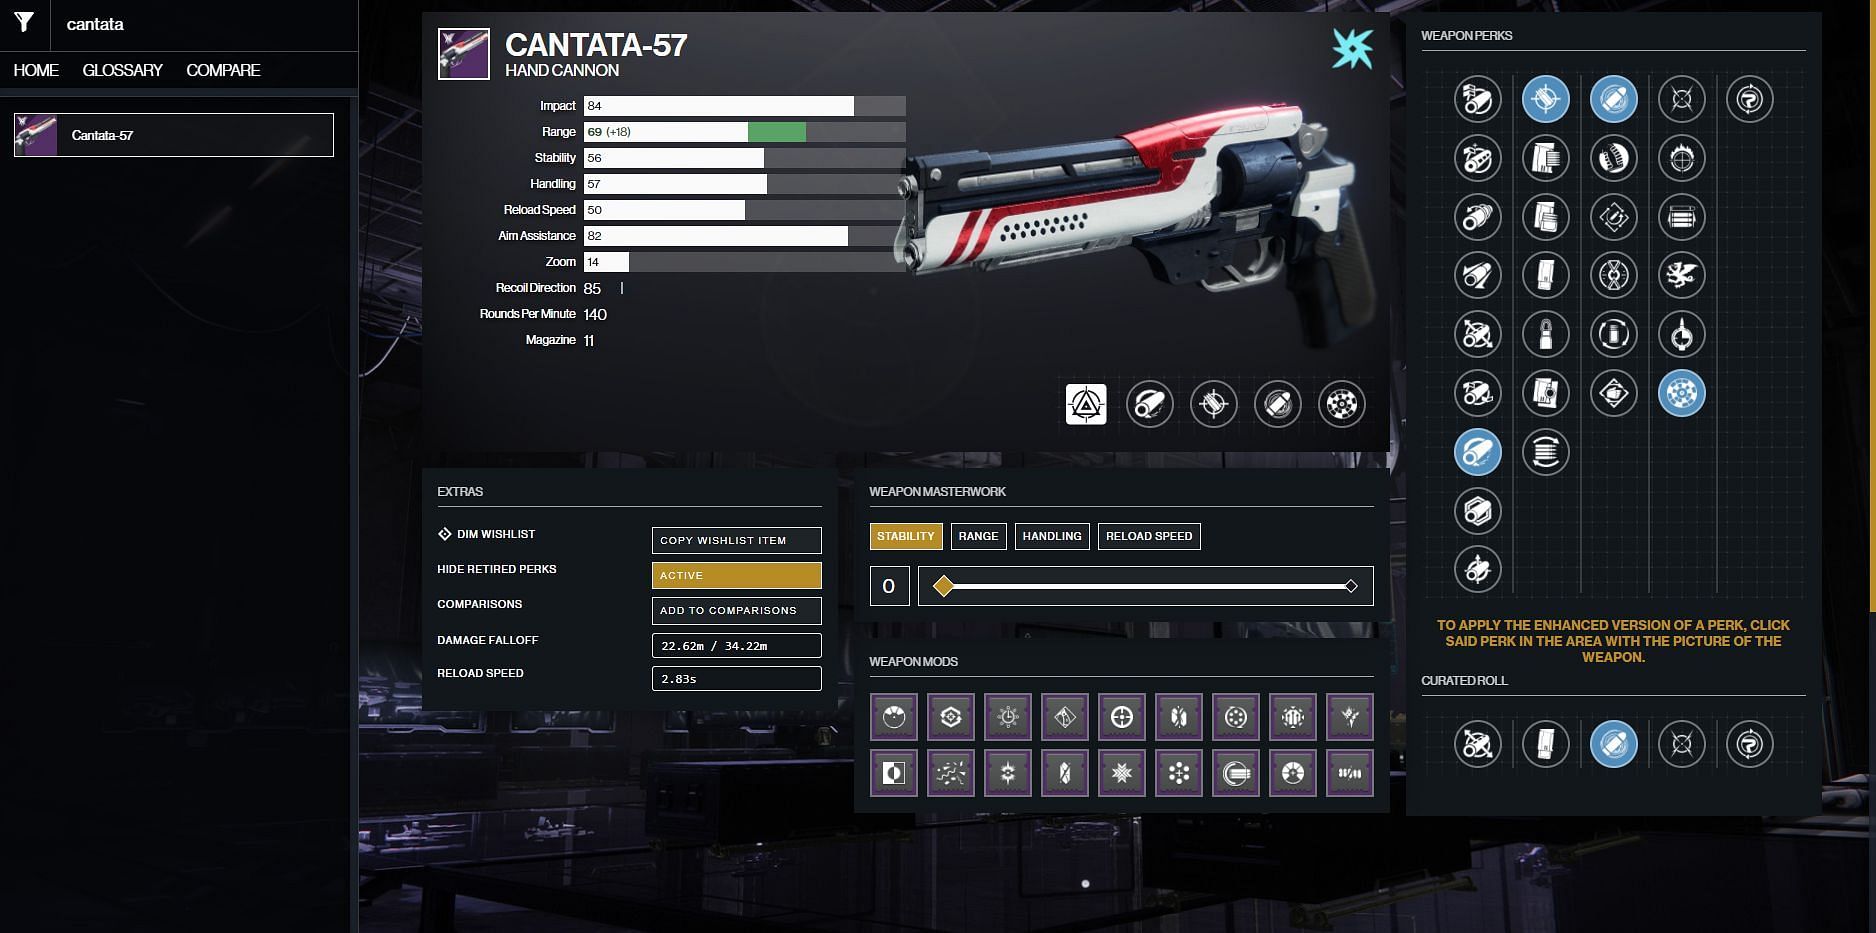 Cantata-57 possible god roll for PvP (Image via Destiny 2 gunsmith)